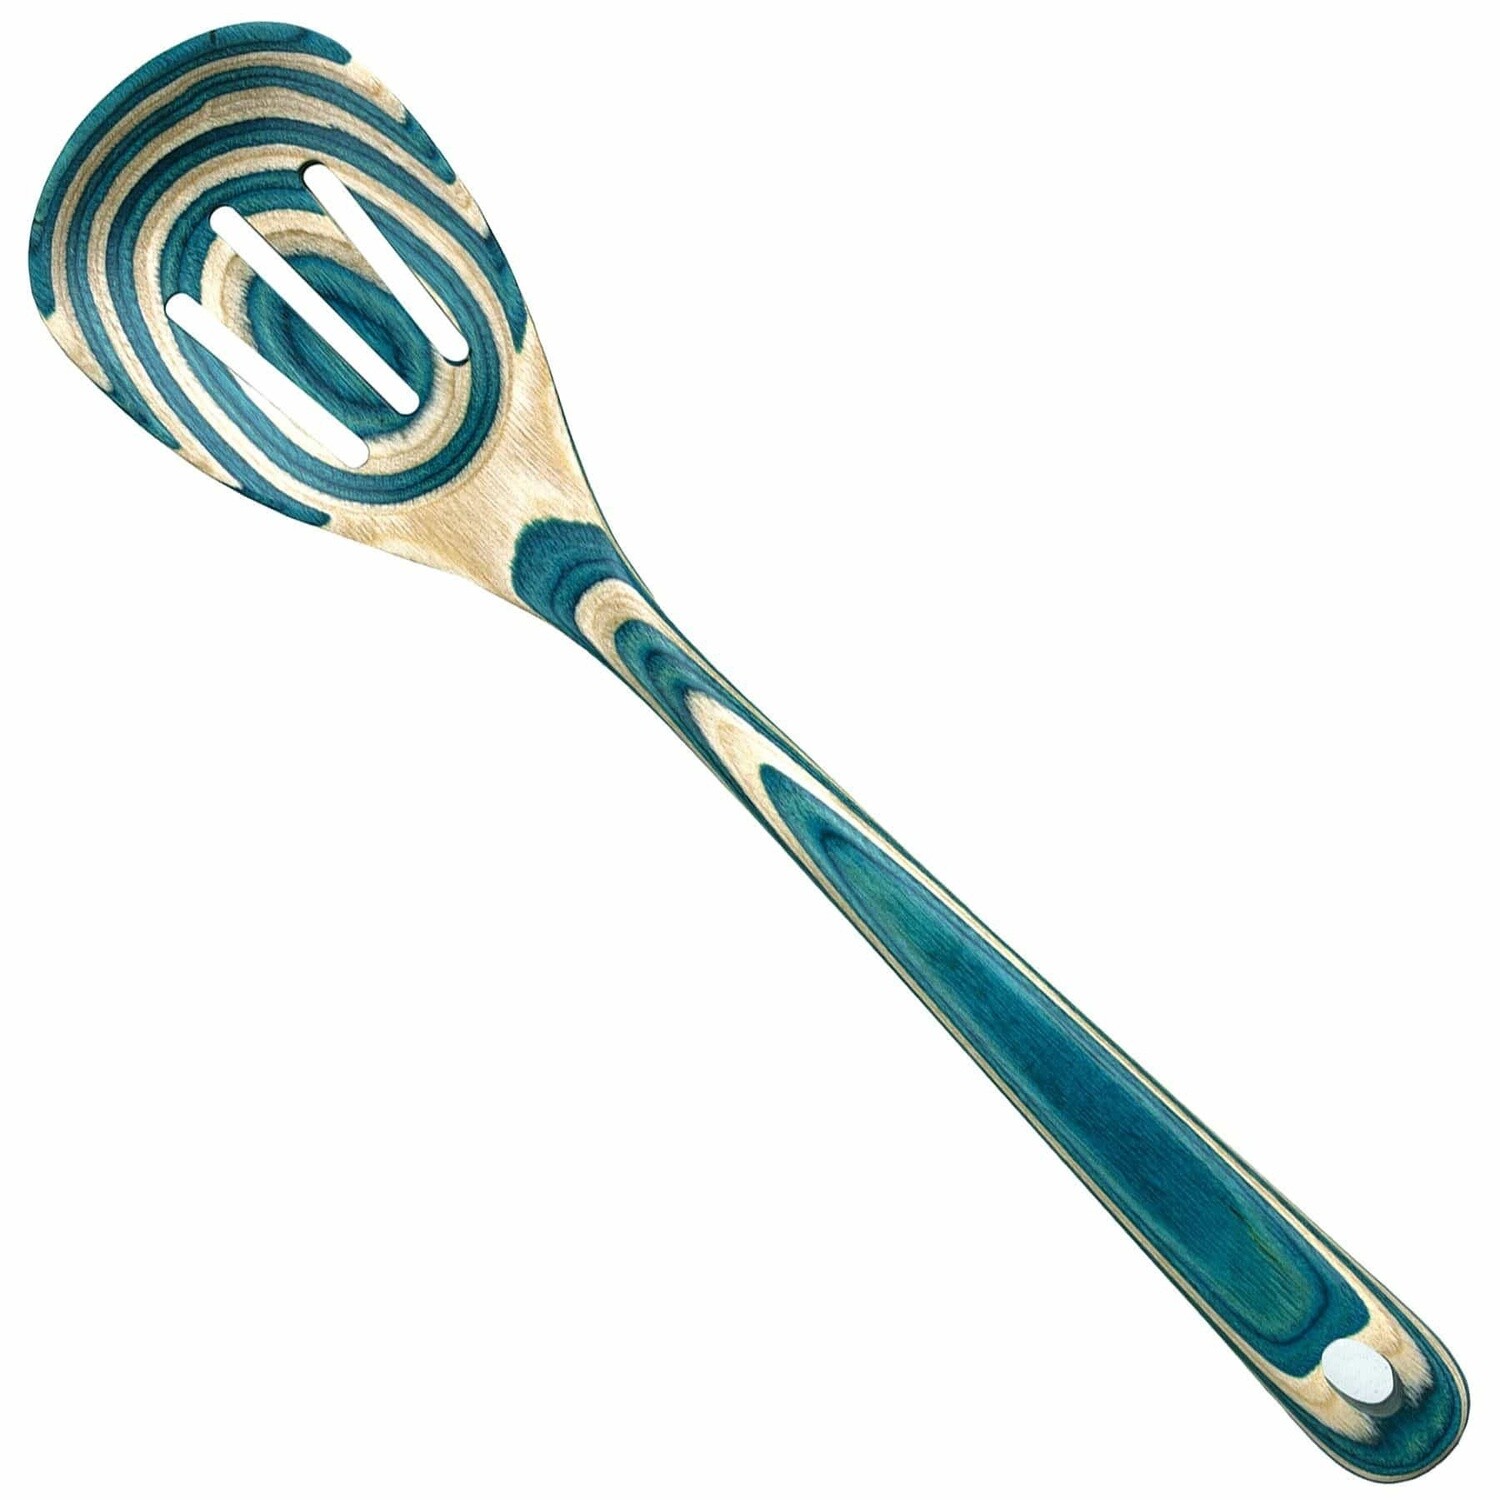 Baltique Mykonos Slotted Spoon